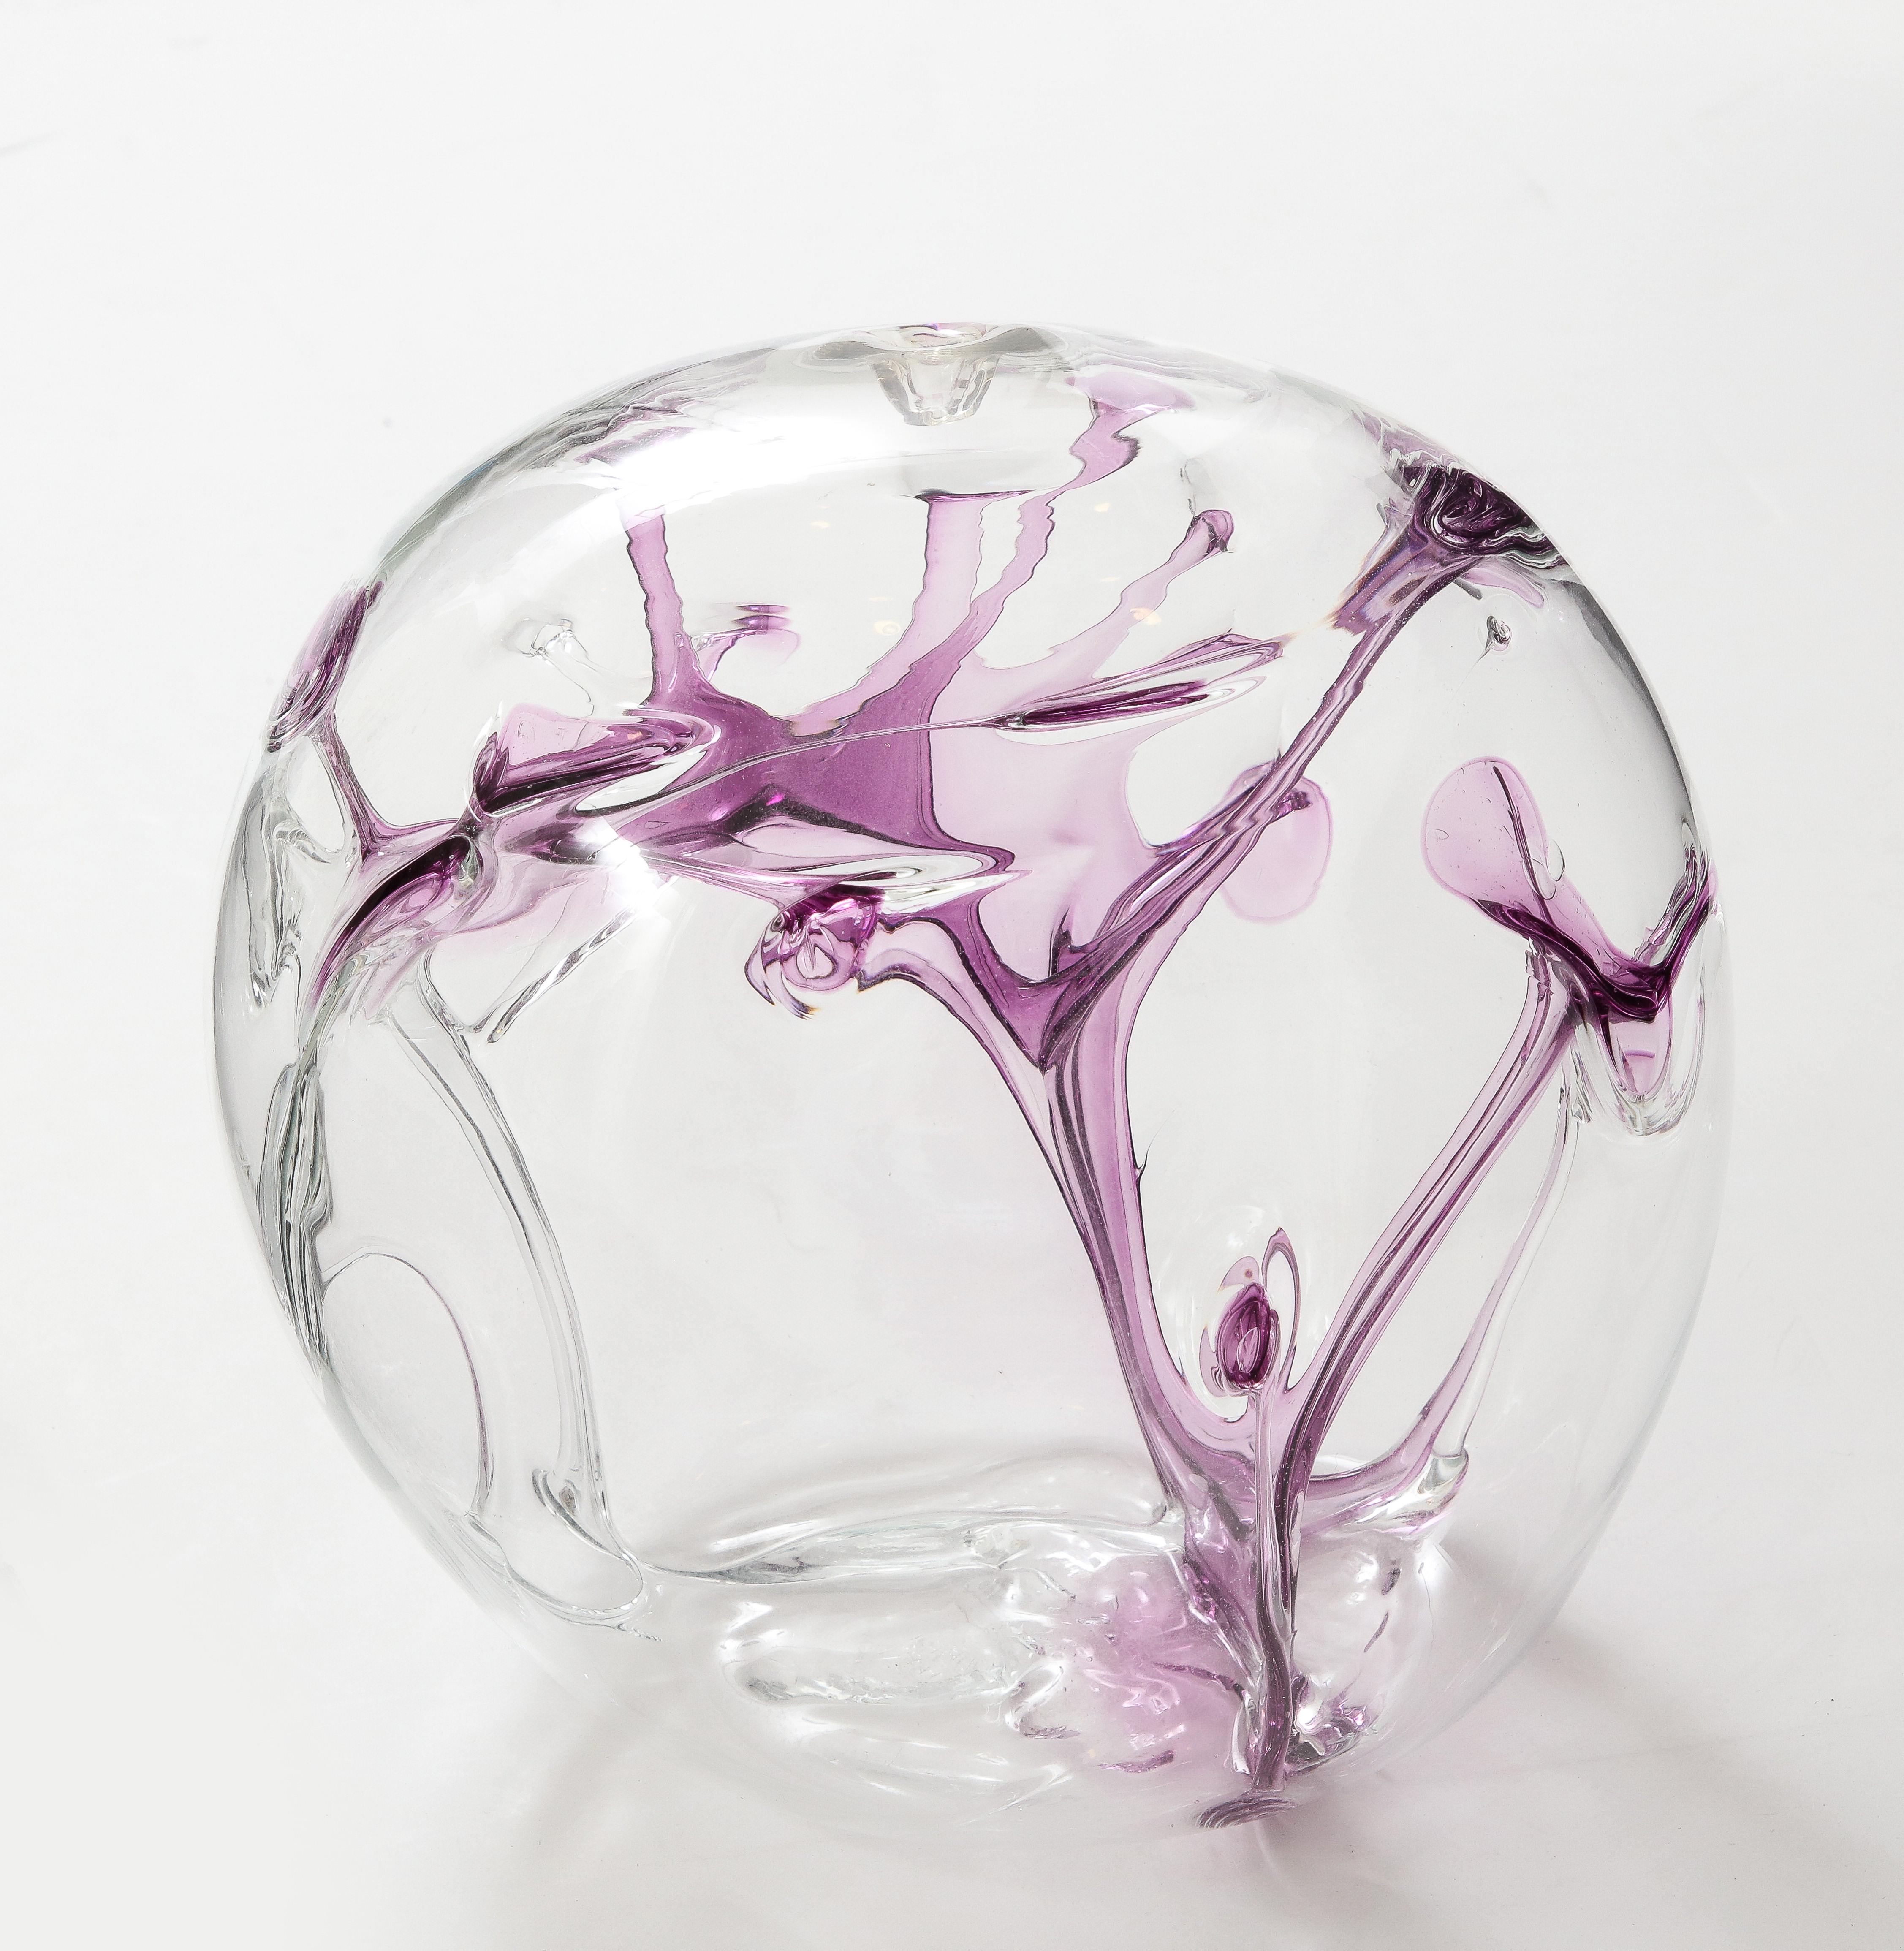 Peter Bramhall Violett, Klarglaskugel (Glaskunst) im Angebot